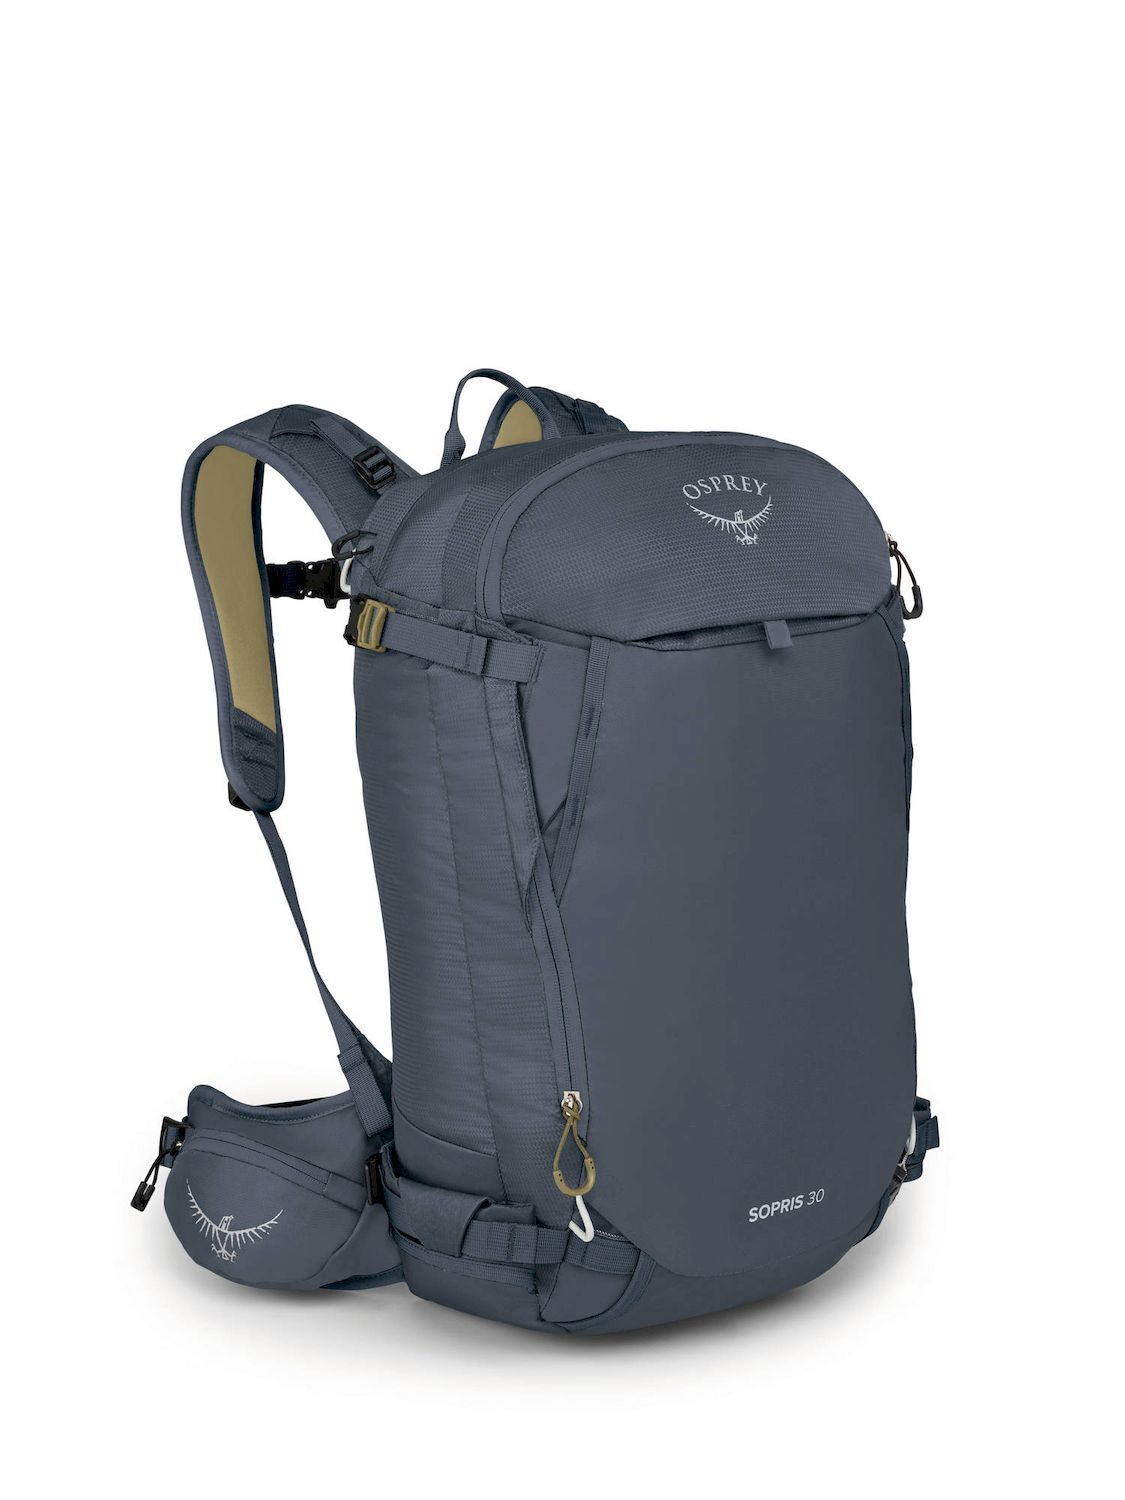 Osprey Sopris 30 - Ski backpack - Women's